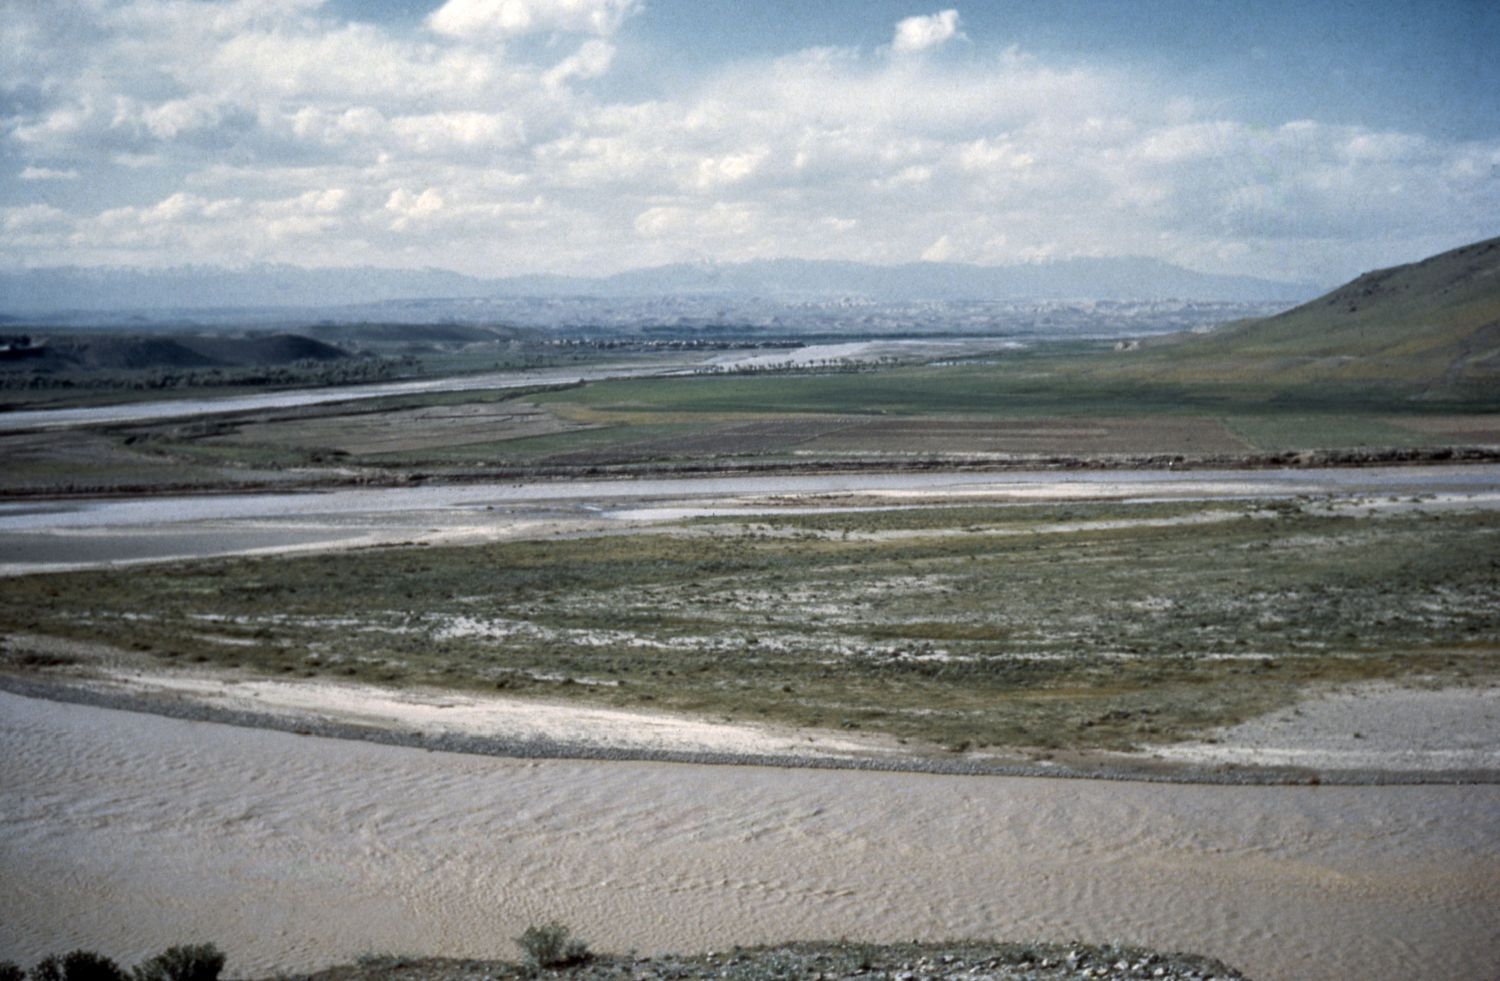 General landscape view at an unidentified location in Kurdistan, Iran.